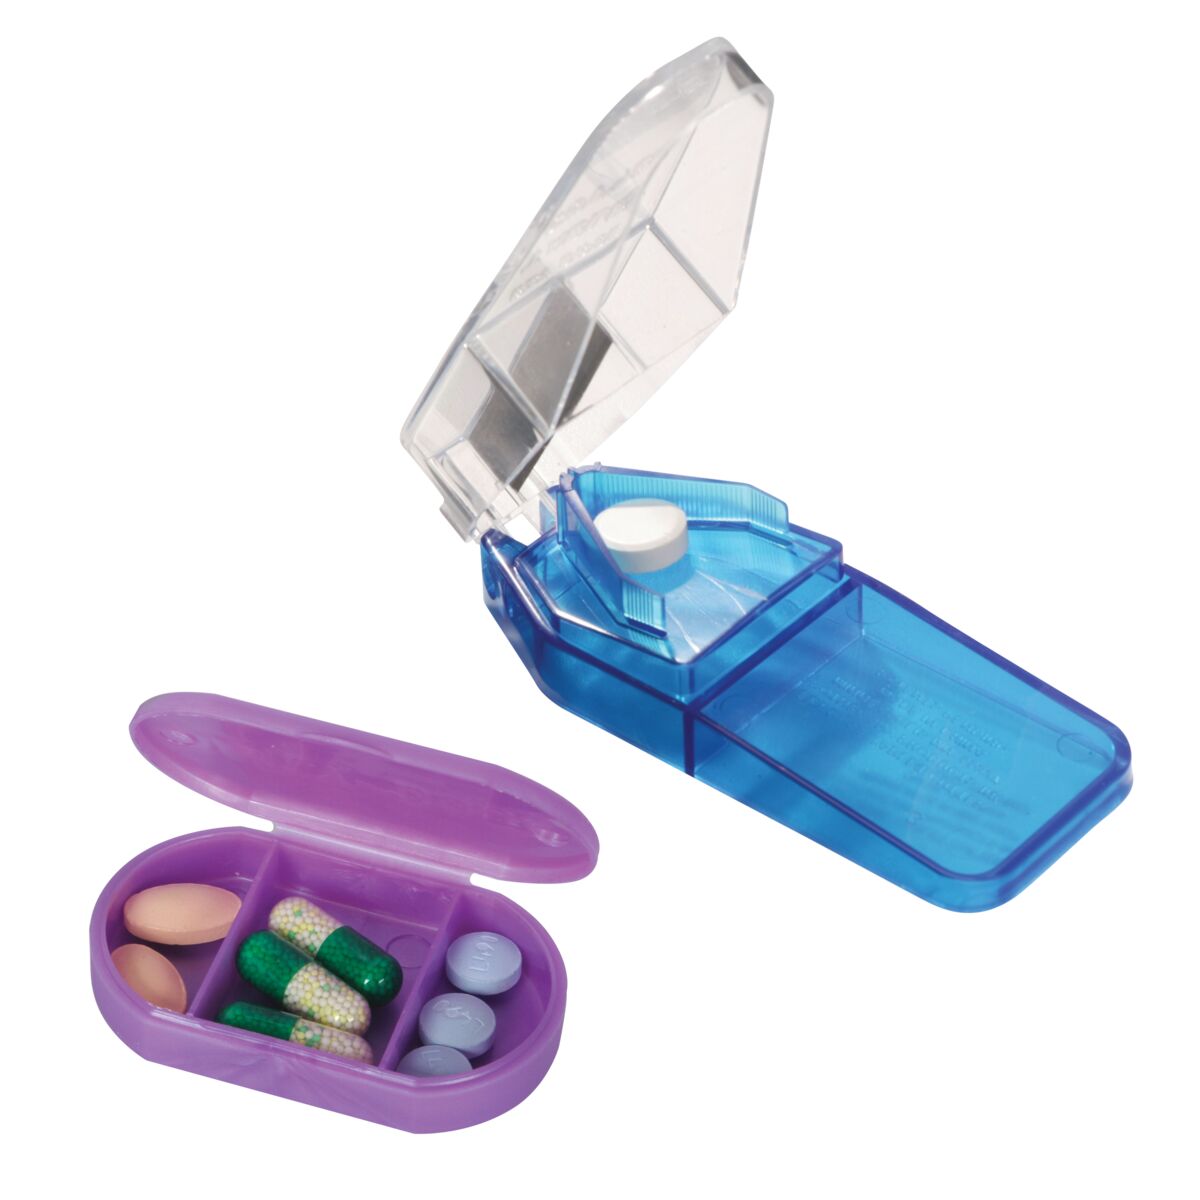 Medication Supplies: Pill Crushers, Splitters, & Organizers